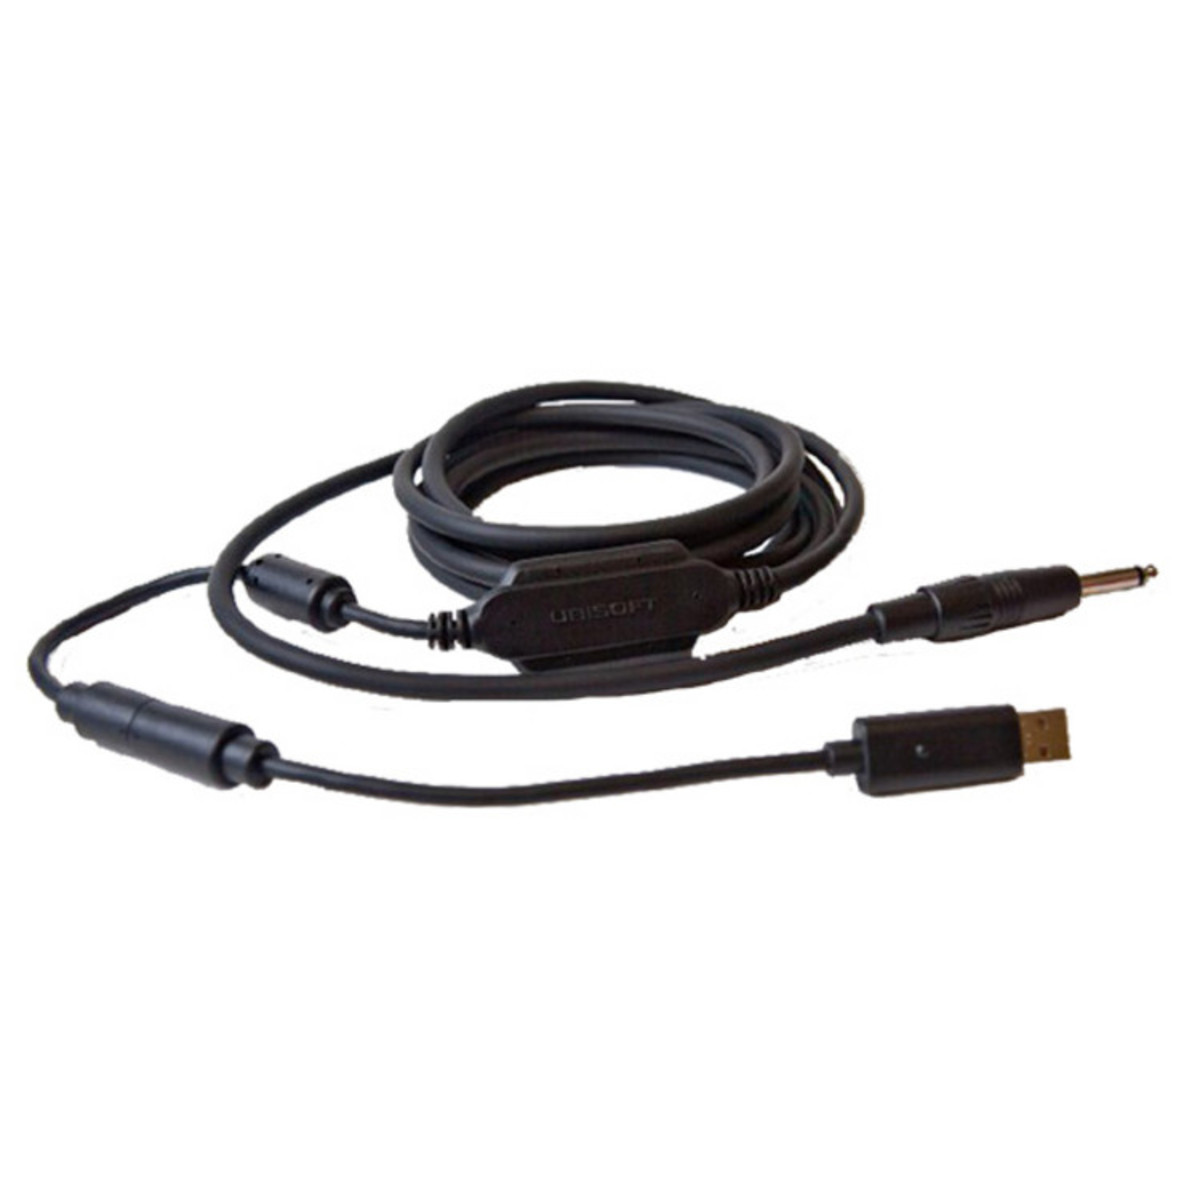 rocksmith real tone cable alternative